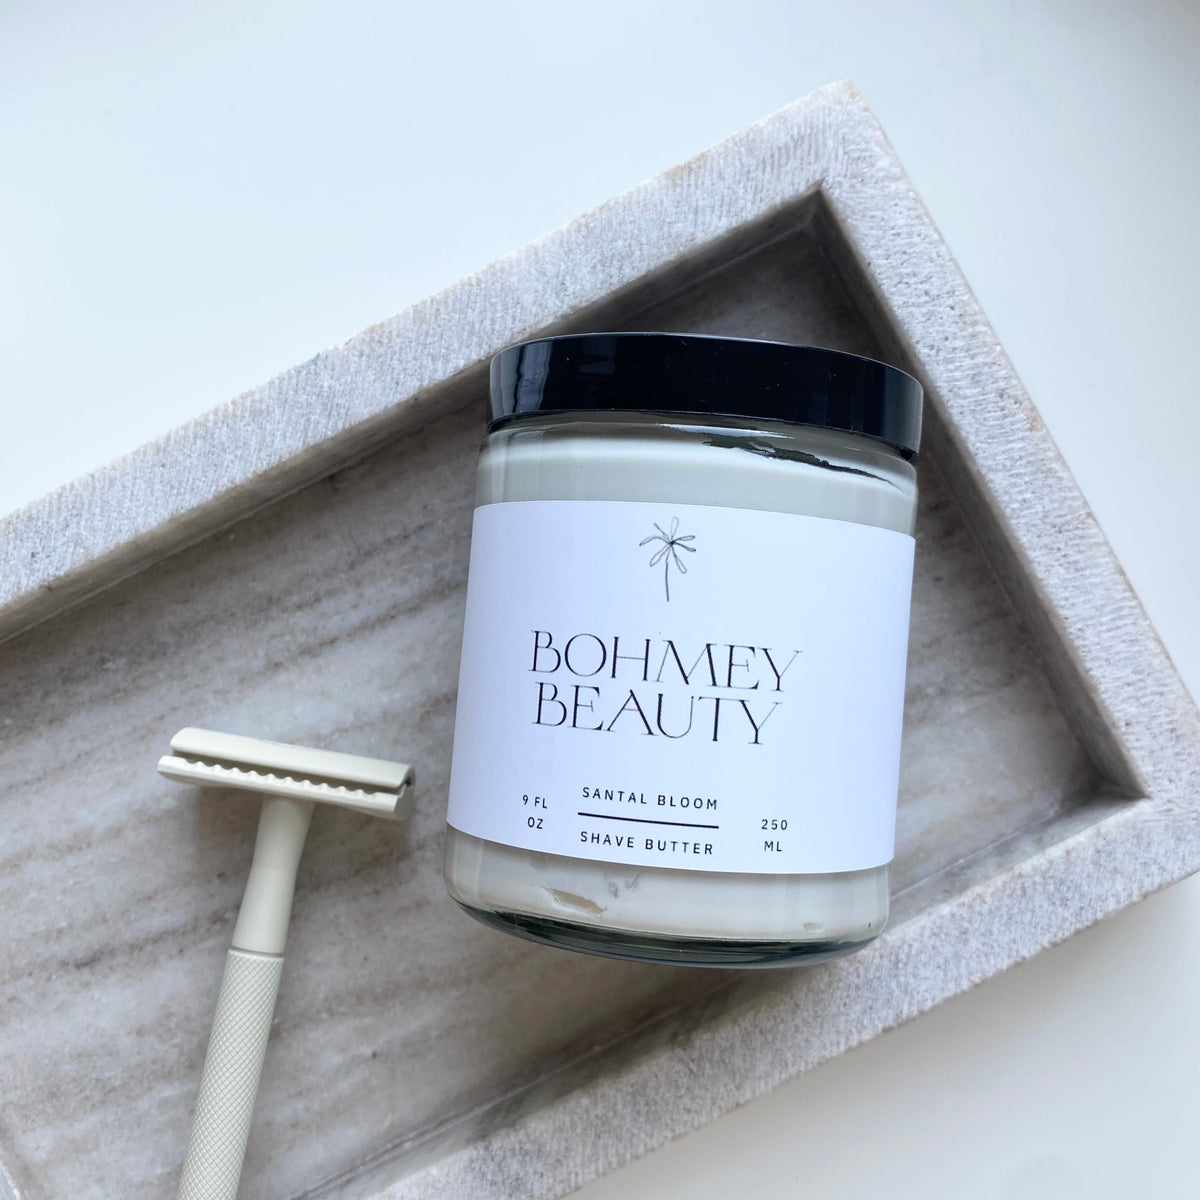 Bohmey Beauty Shave Butter